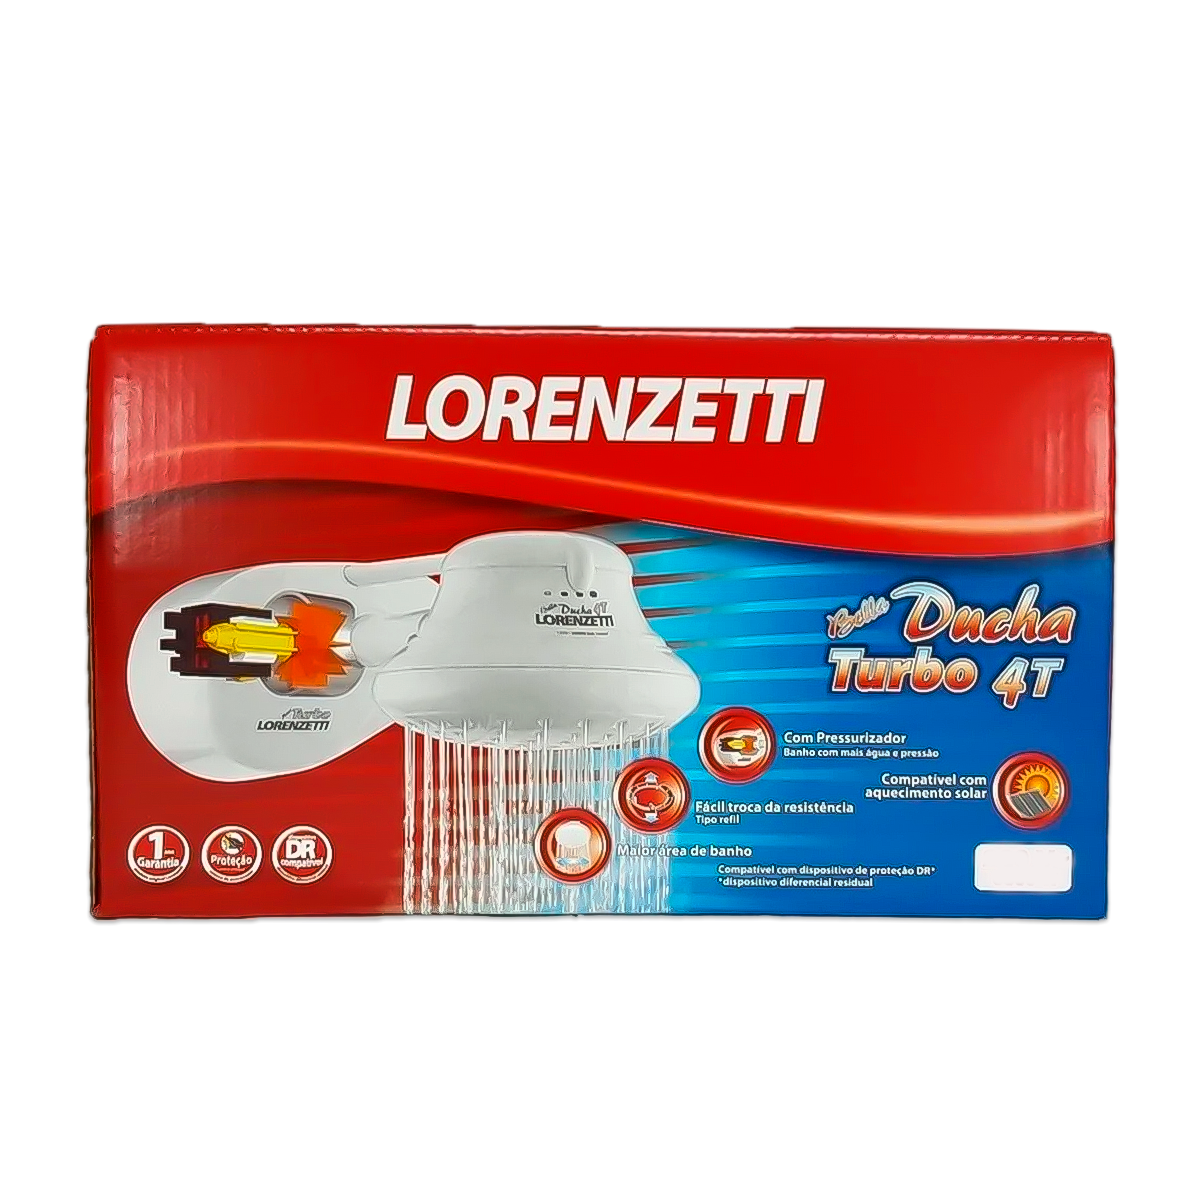 Chuveiro Lorenzetti Bella Ducha Turbo Ultra 4T 127v 5500w - 3